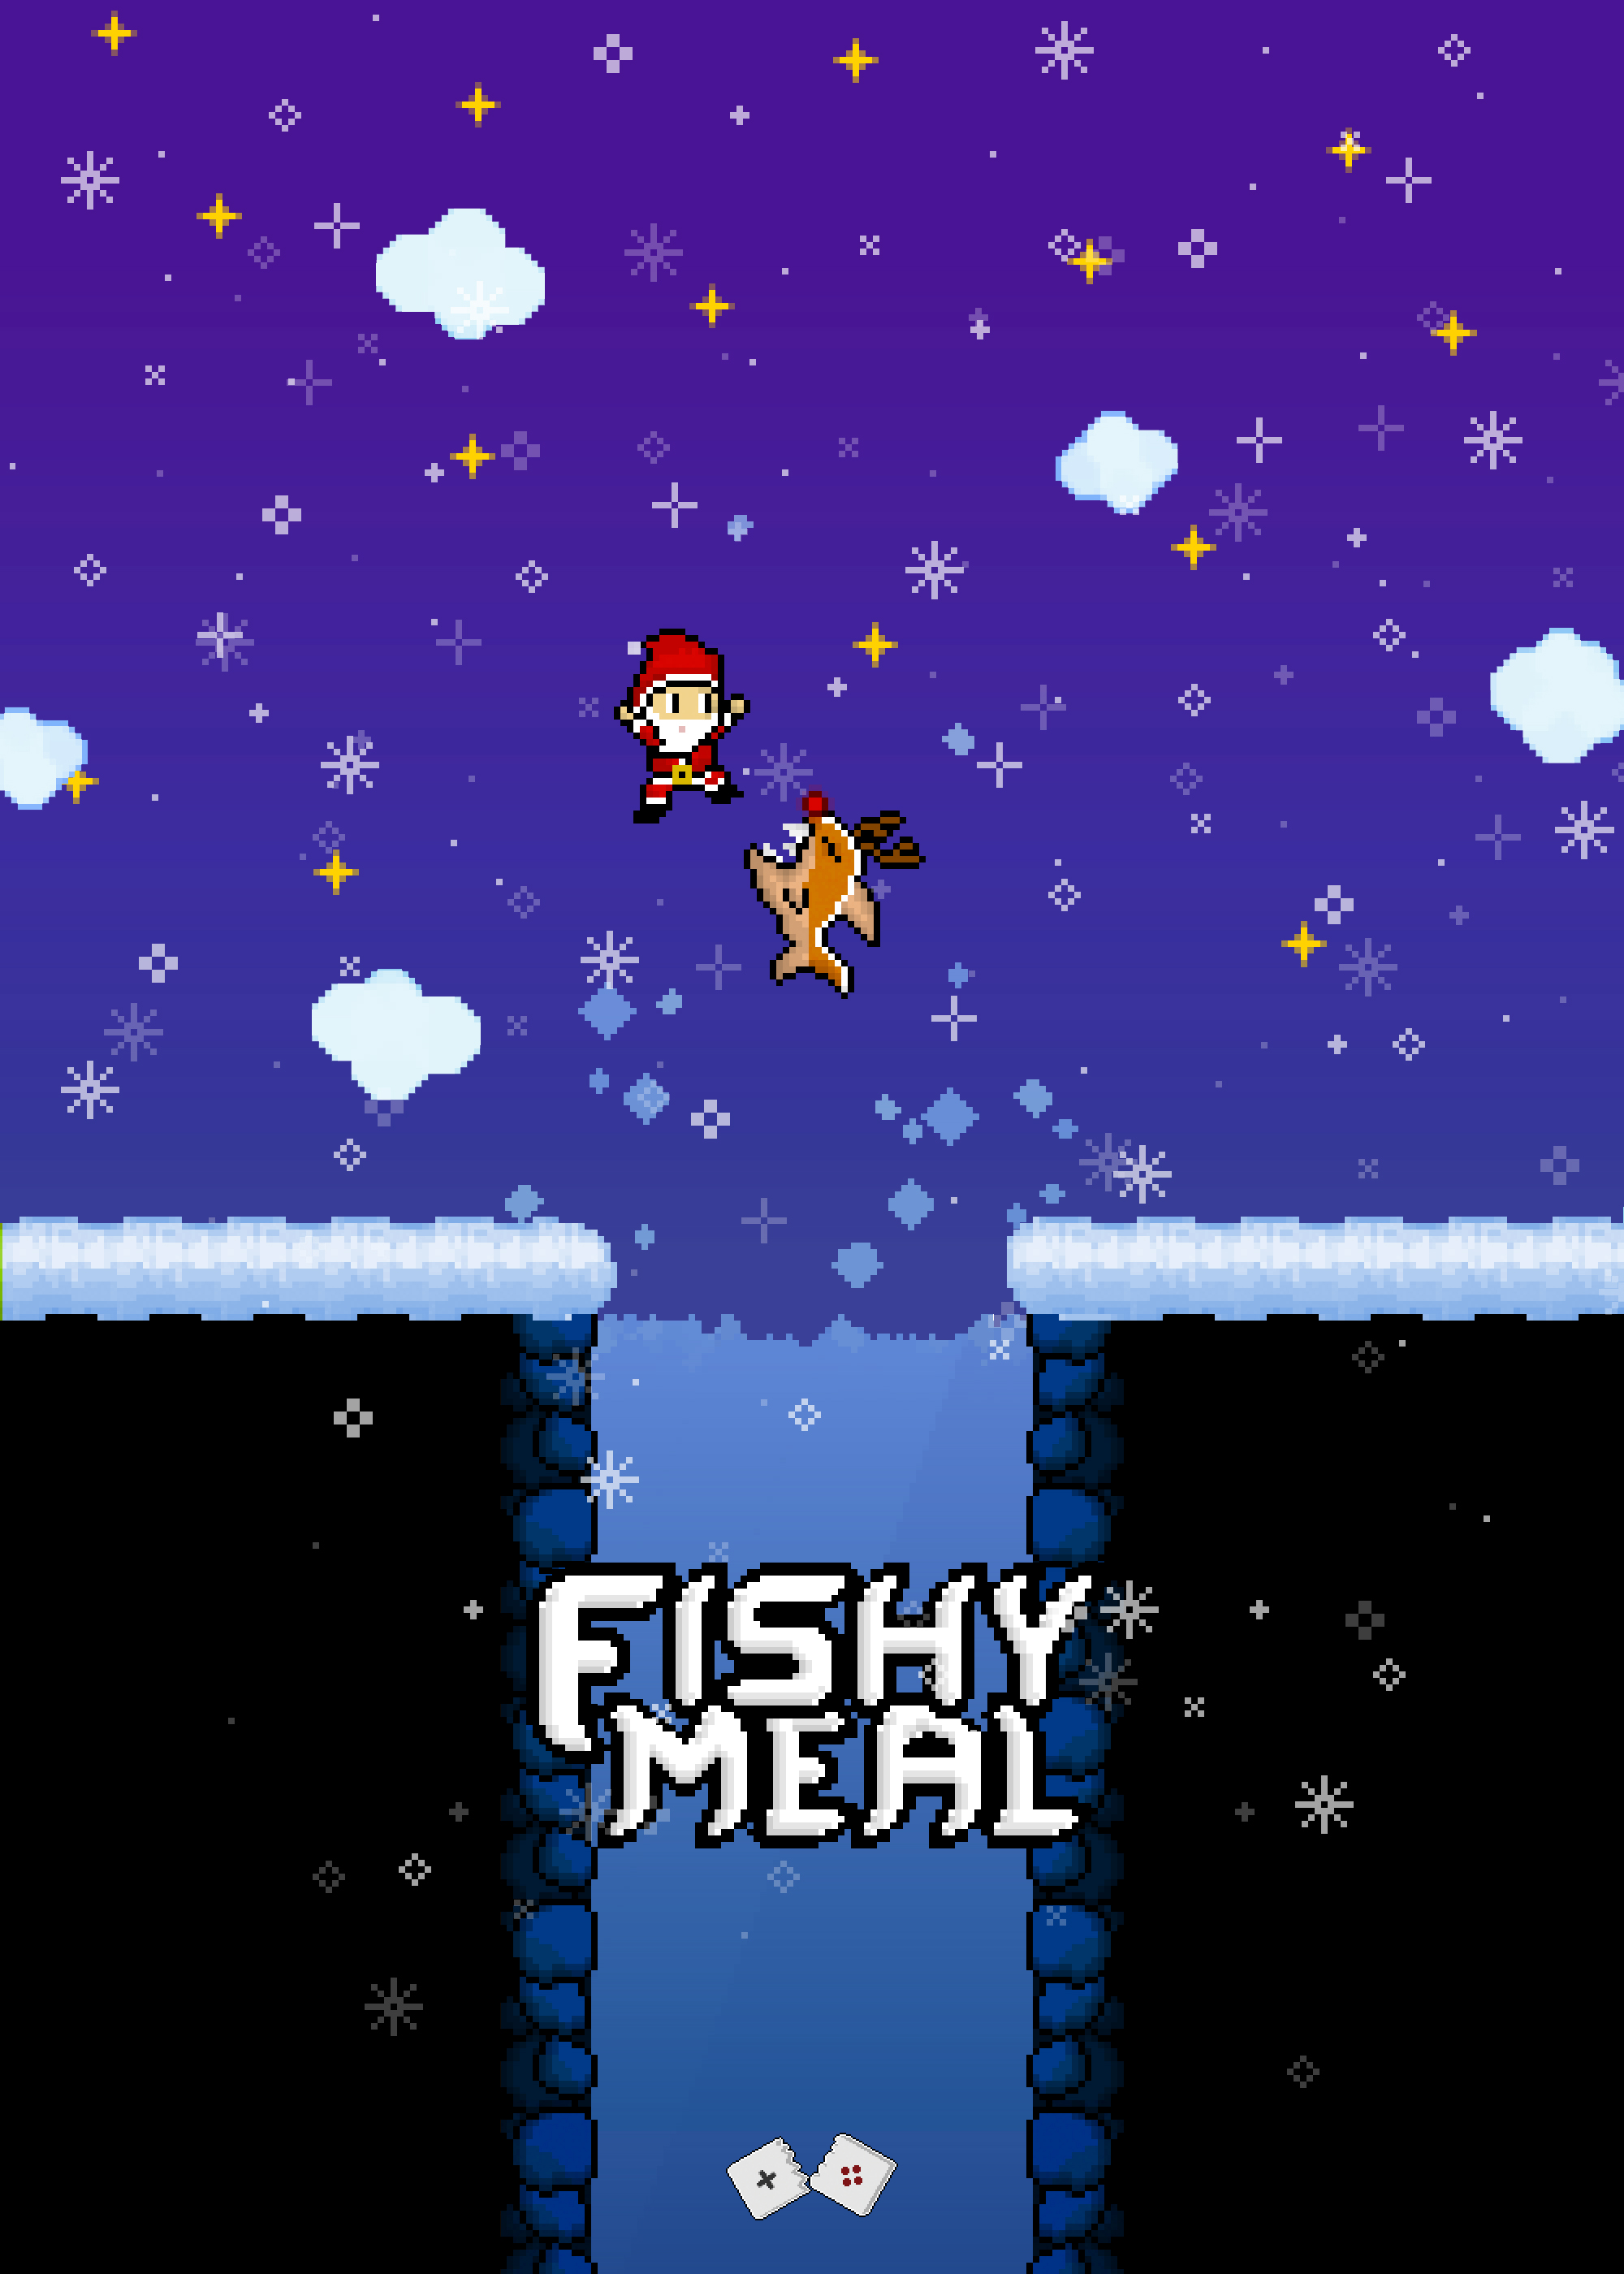 Piranha Rudolph and Santa in Fishy Meal greeting card